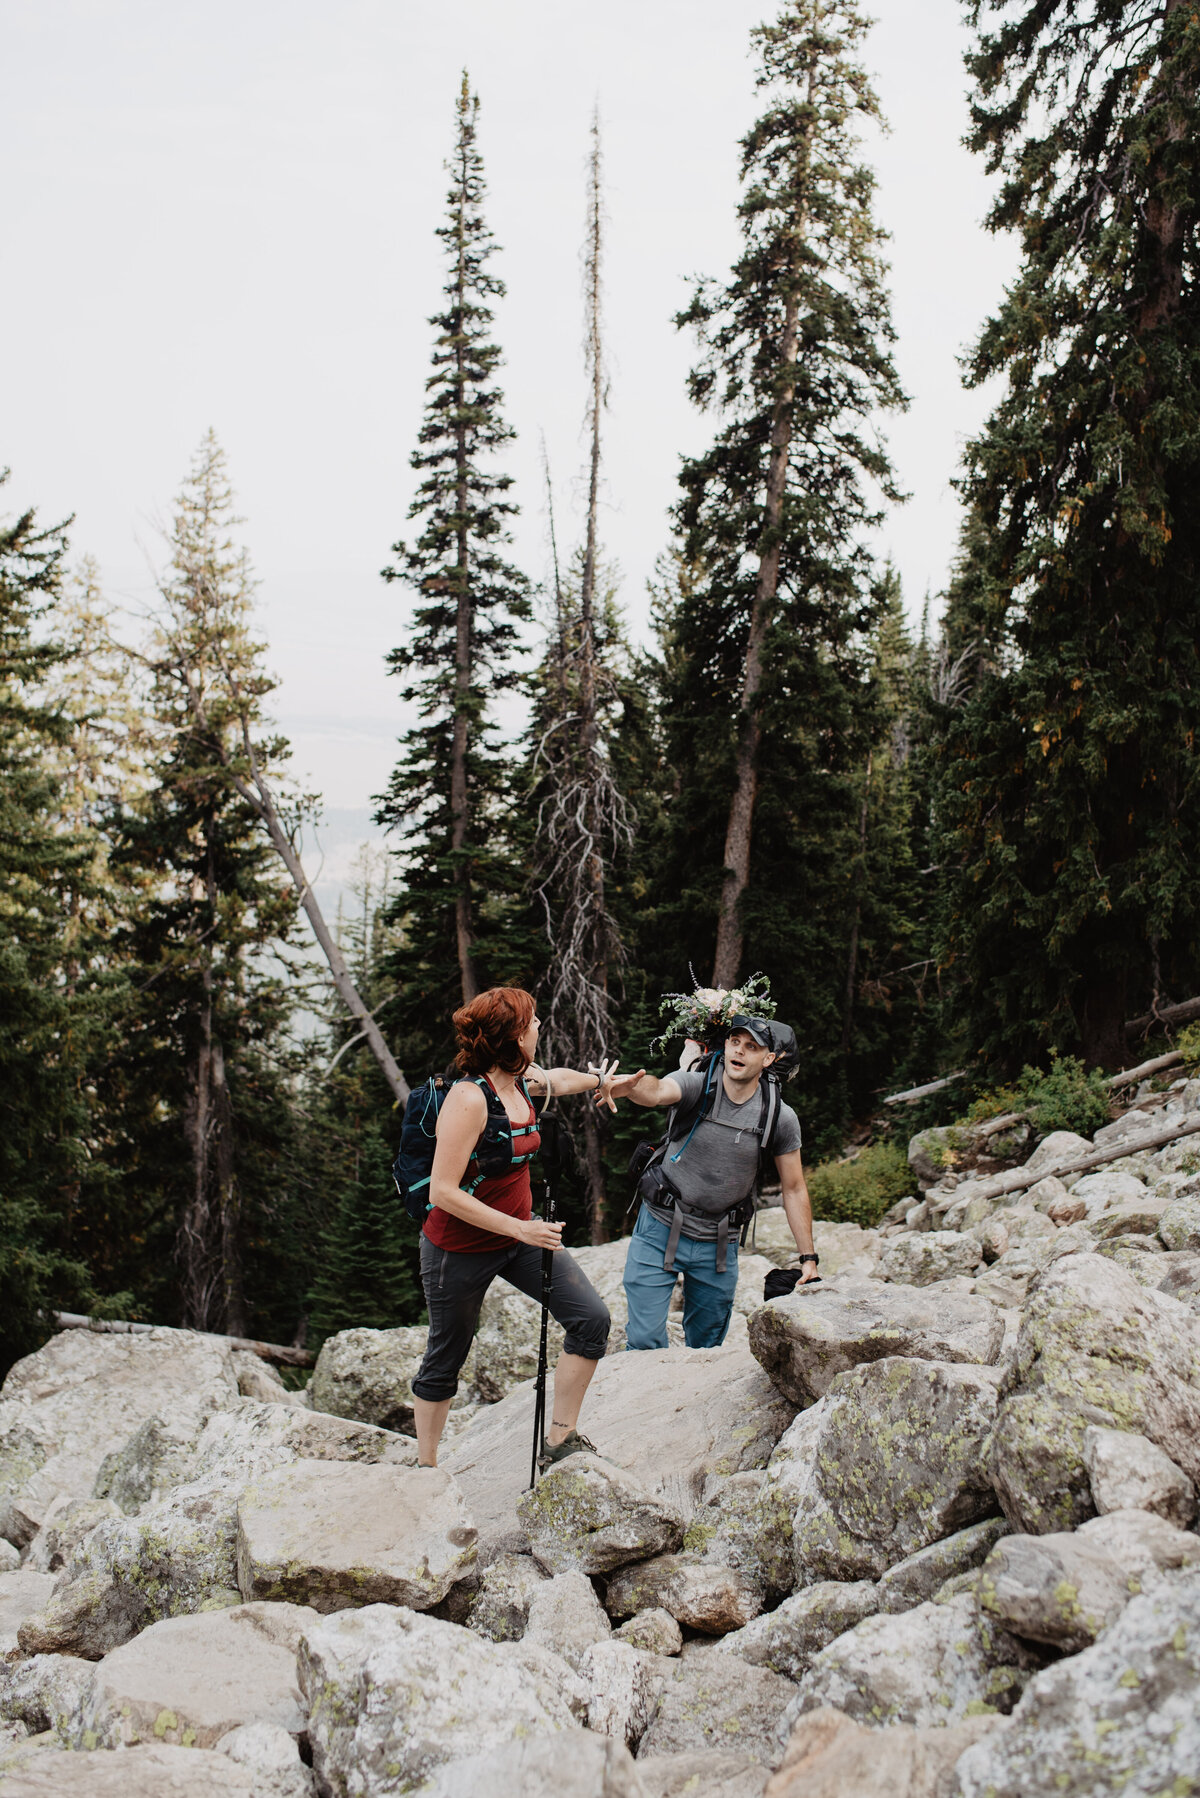 Jackson Hole photographers capture couple helping one another through hike